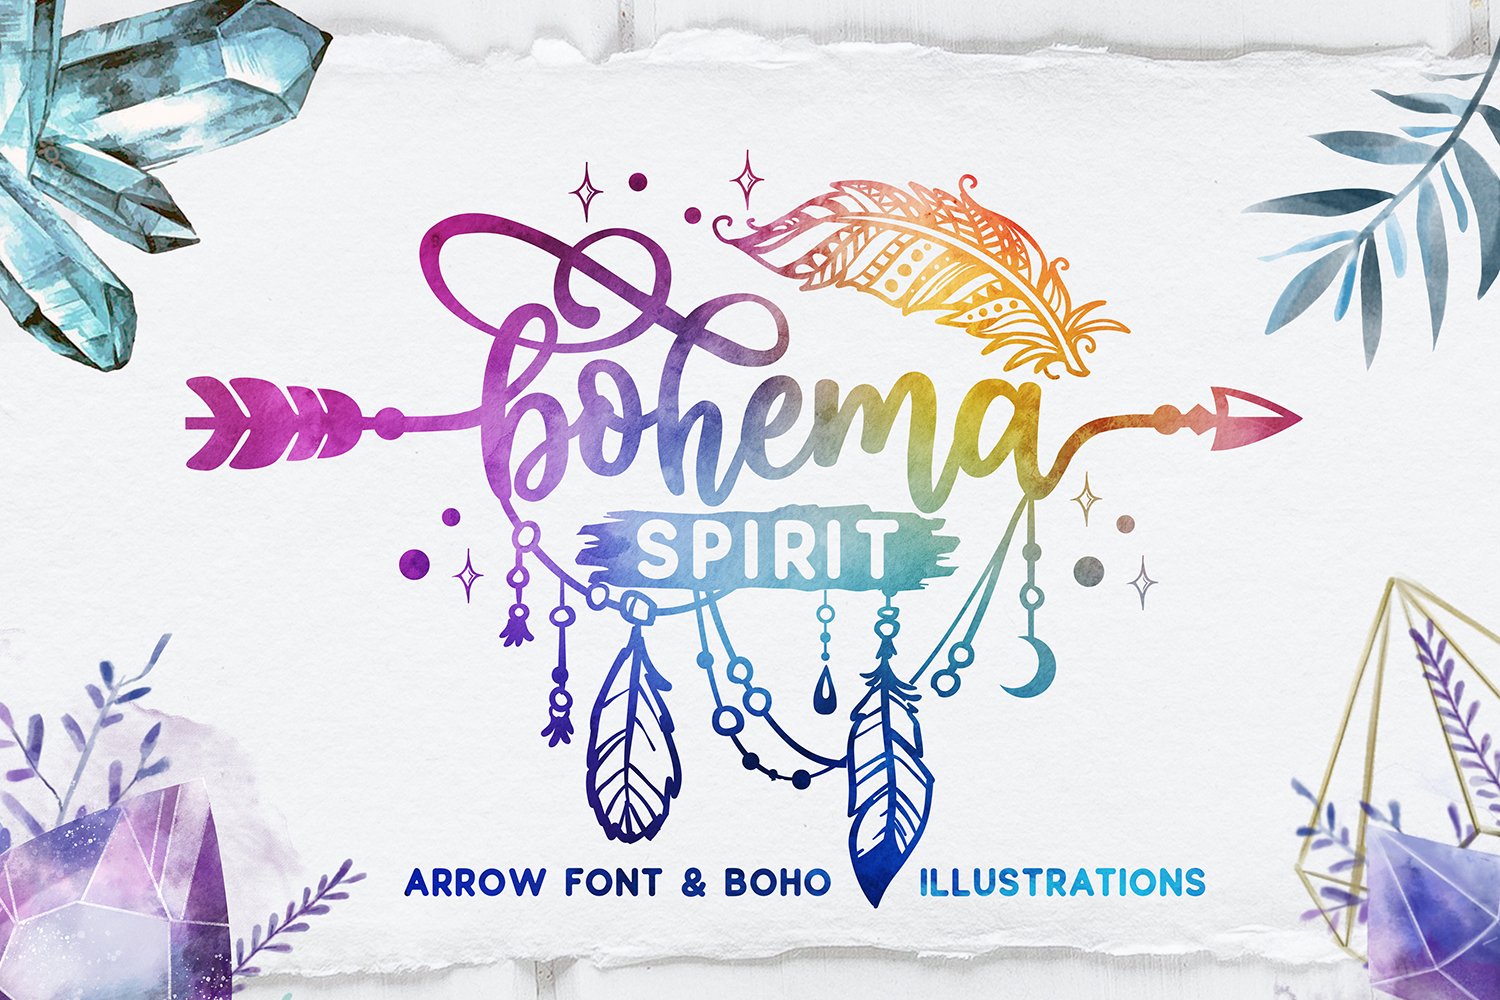 Bohema Spirit font and illustrations cover image.